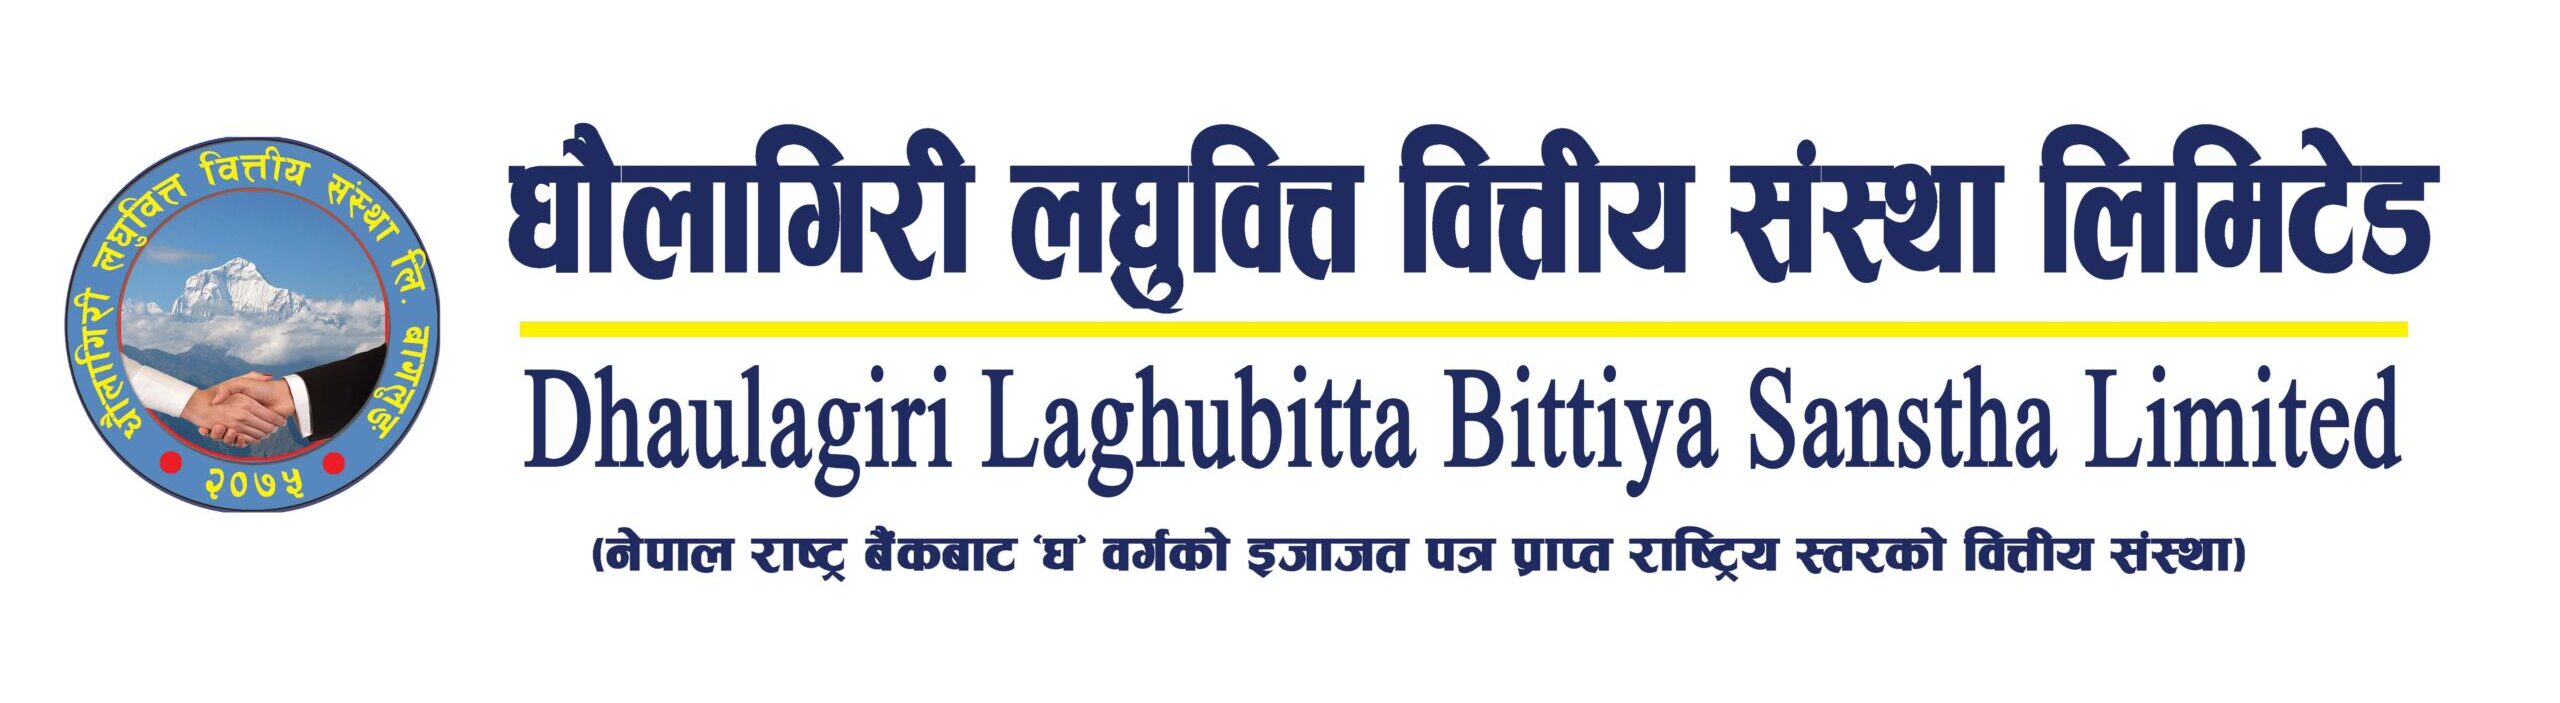 Dhaulagiri Laghubitta Bittiya Sanstha Ltd